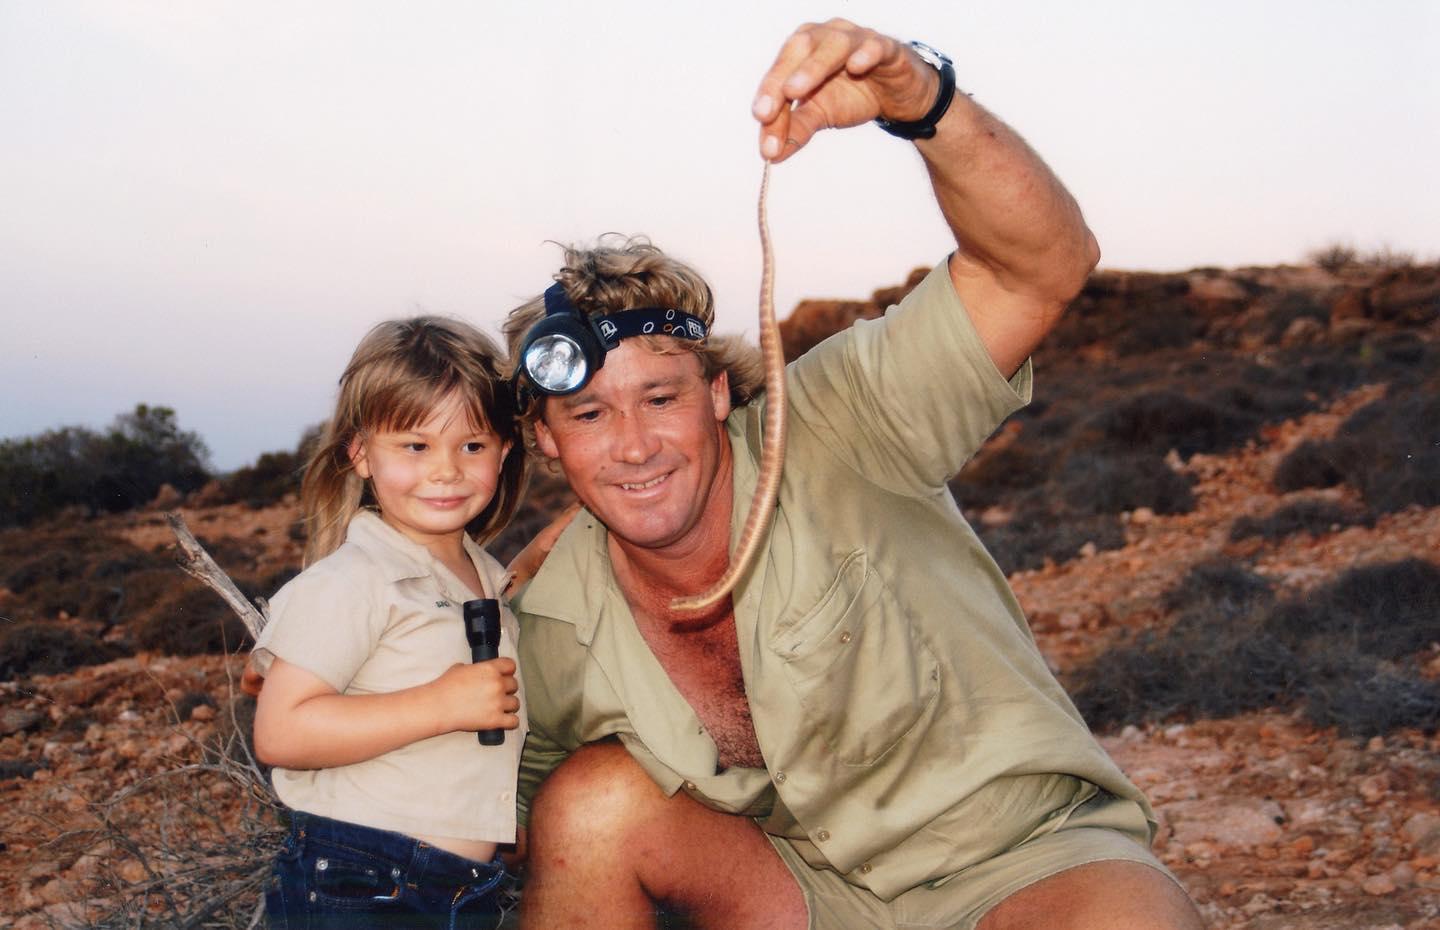 Bindi Irwin and Steve Irwin